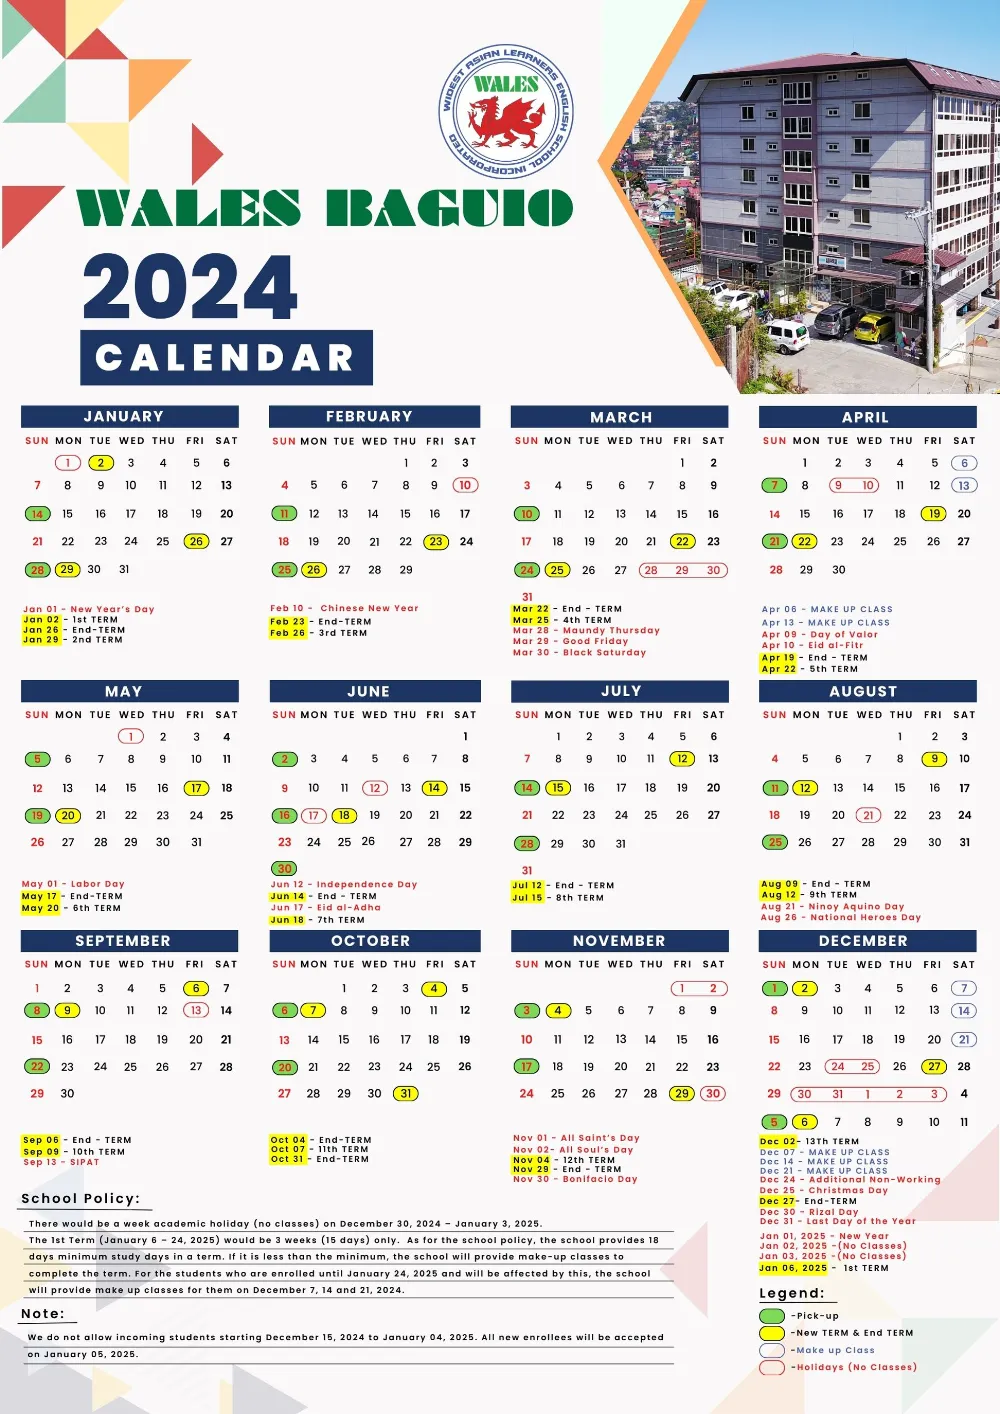 【Wales】2024年カレンダー 「マナベル」セブ島留学・フィリピン留学